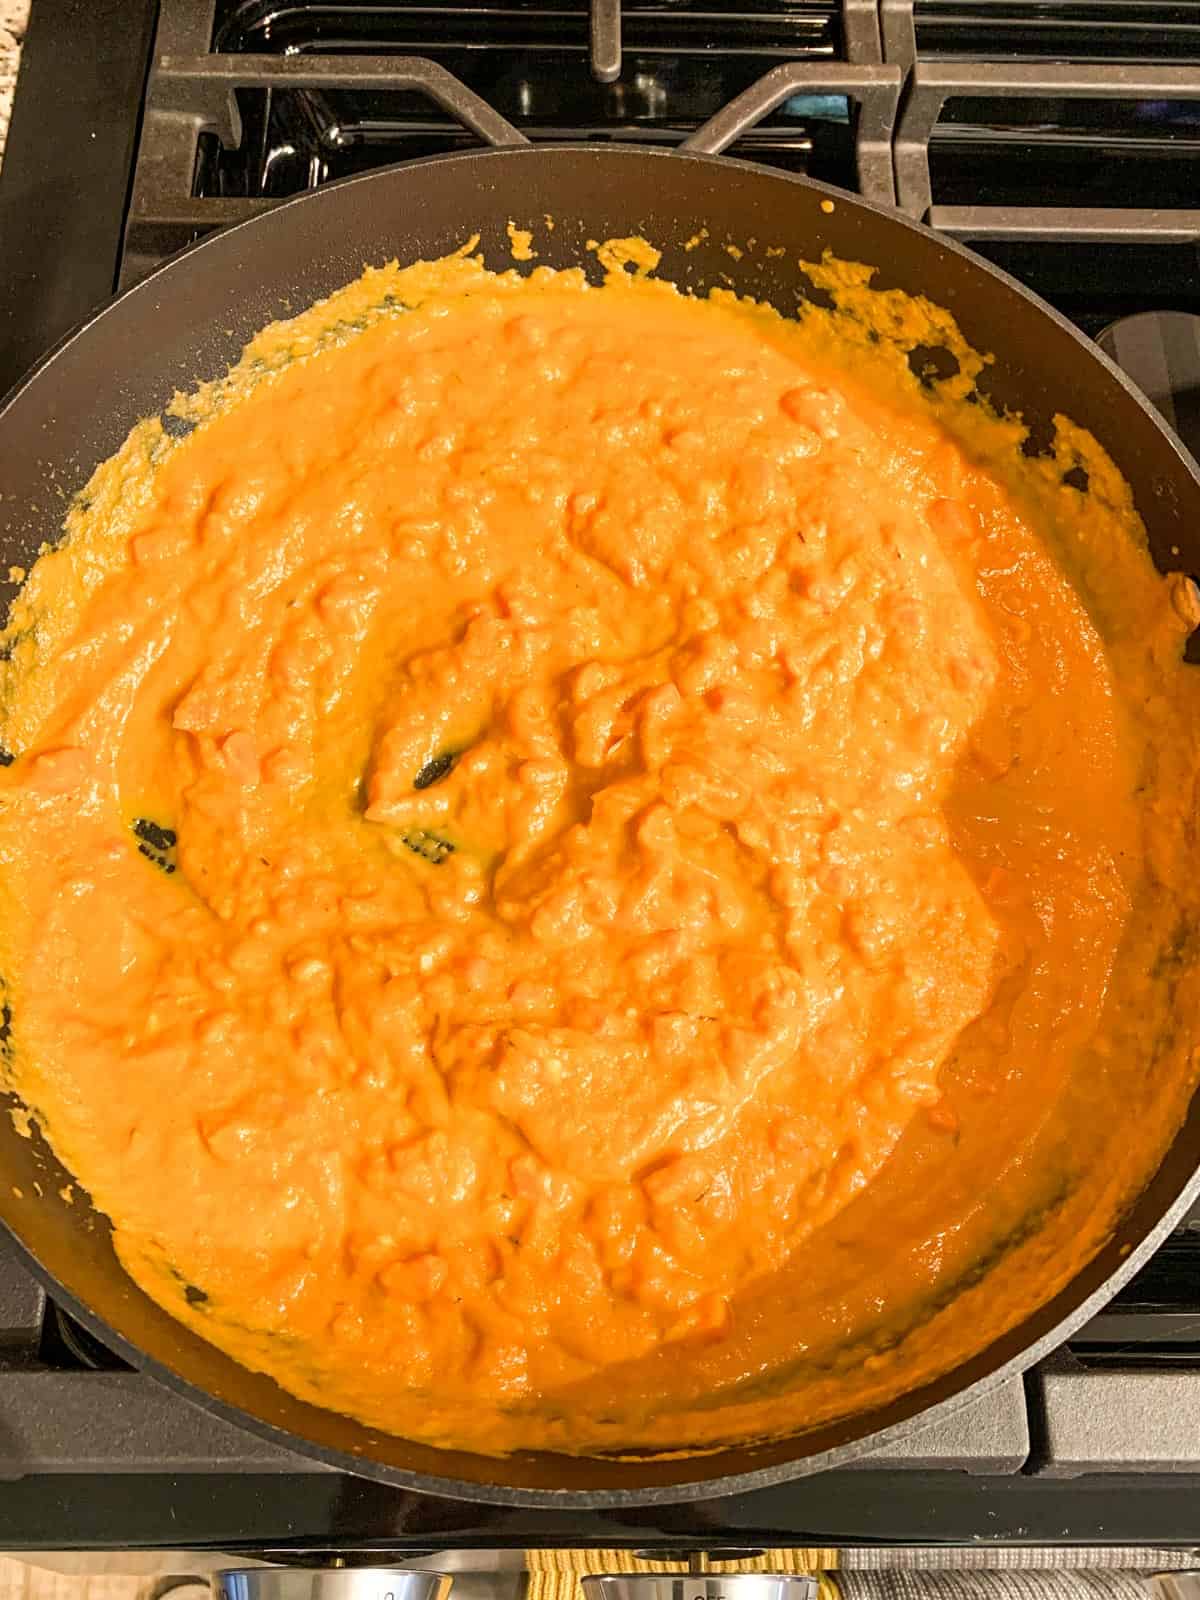 Pumpkin pasta sauce simmering in a skillet.